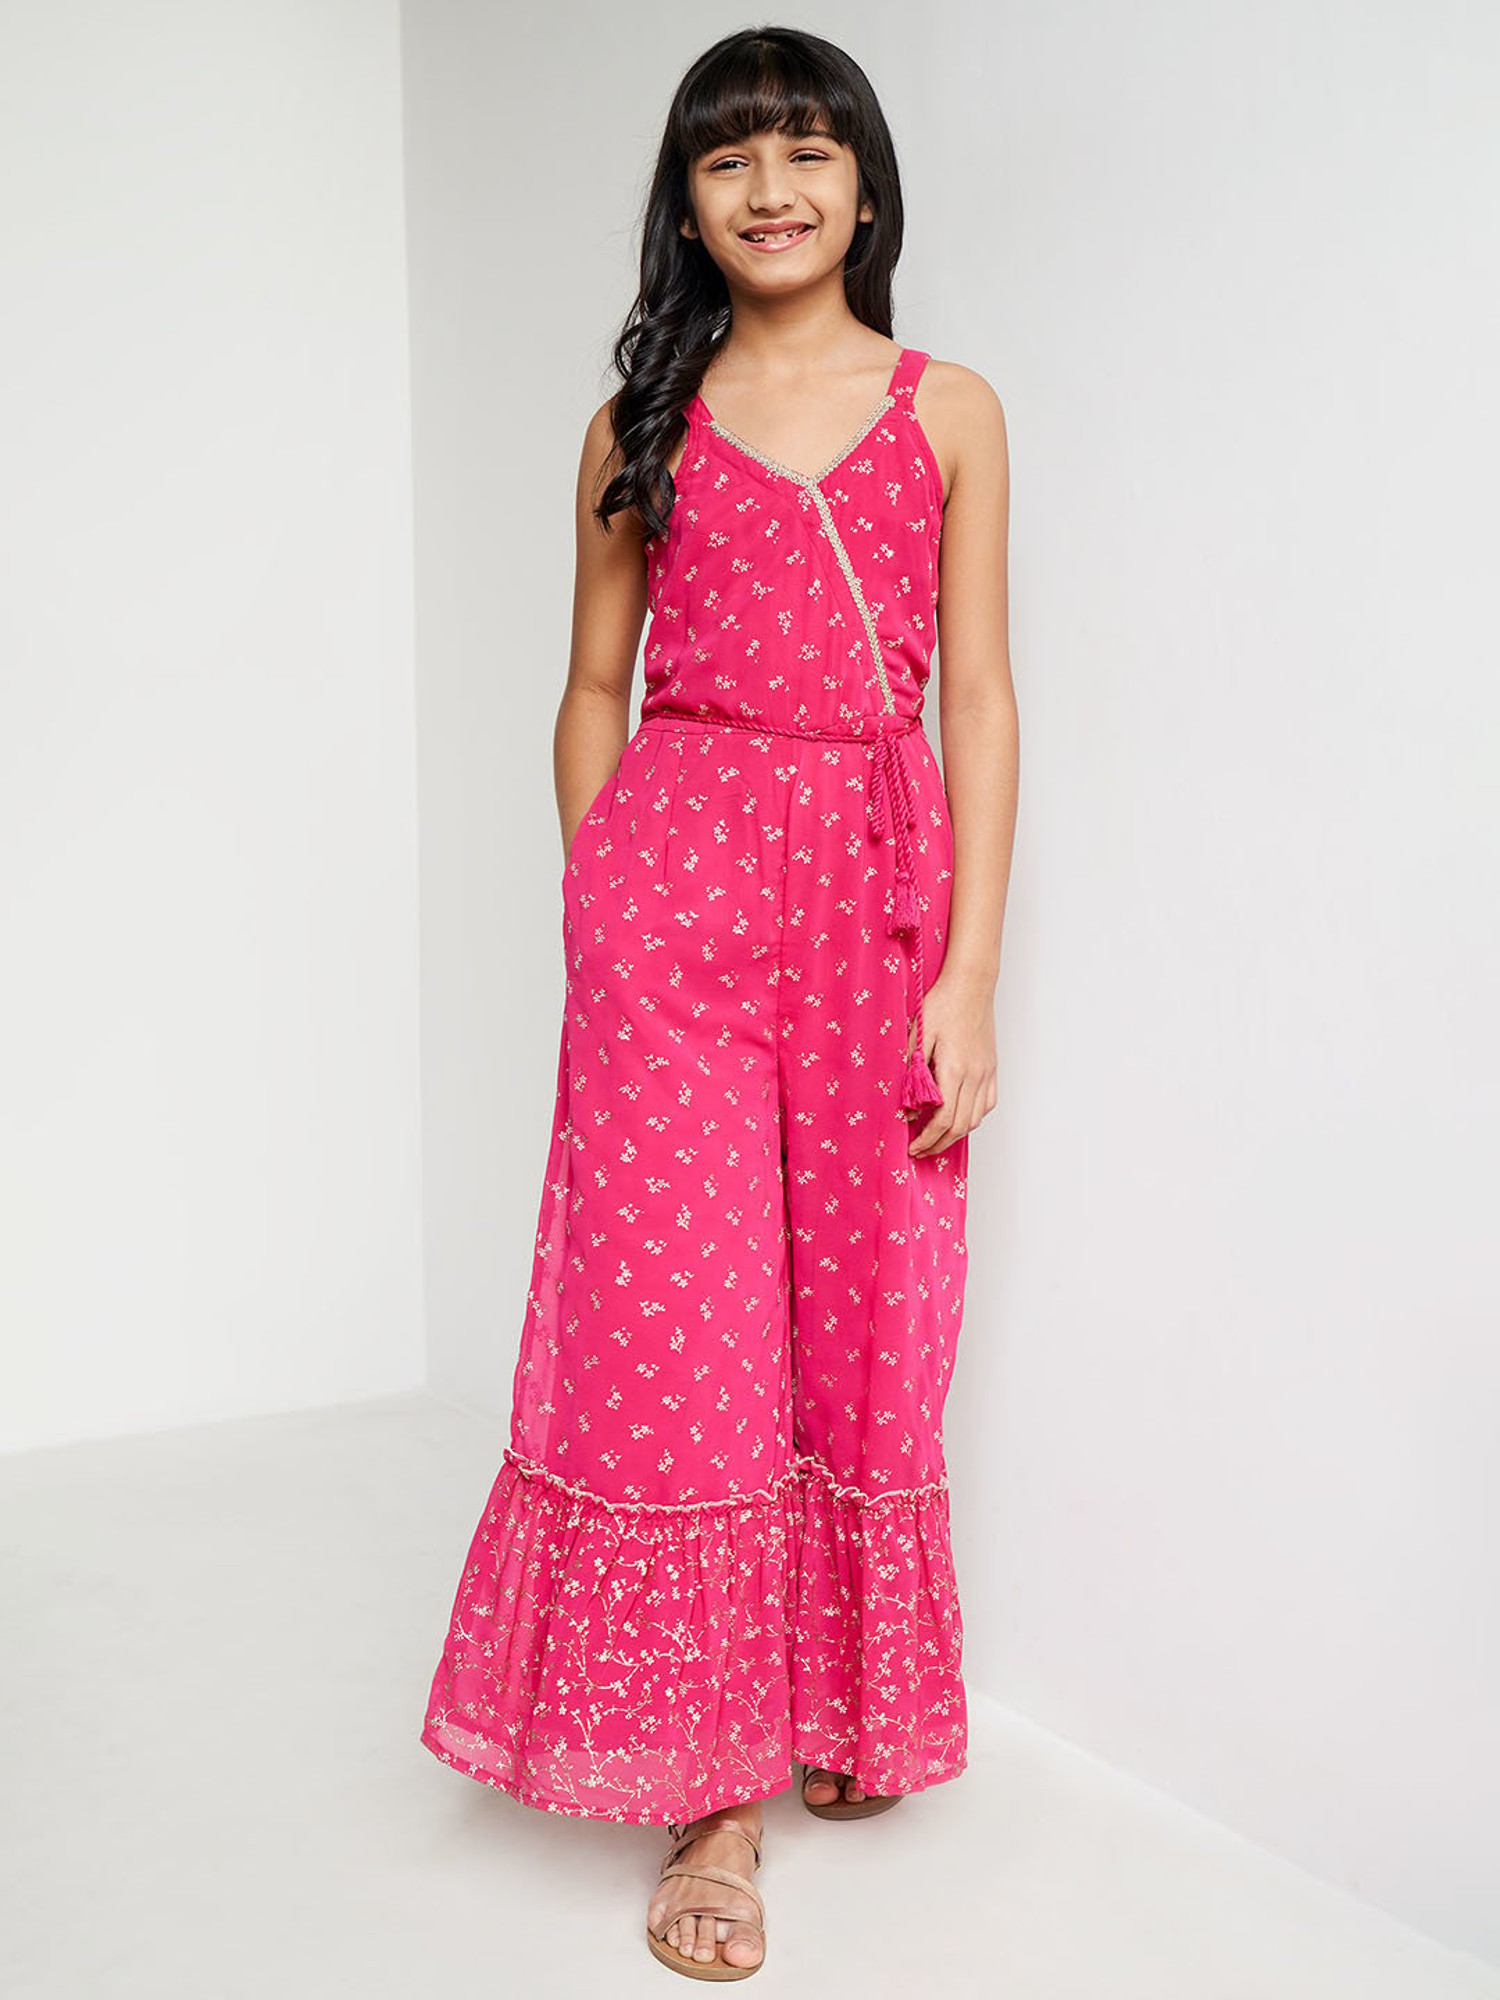 global desi Girl Orange Jumpsuit : Amazon.in: Clothing & Accessories